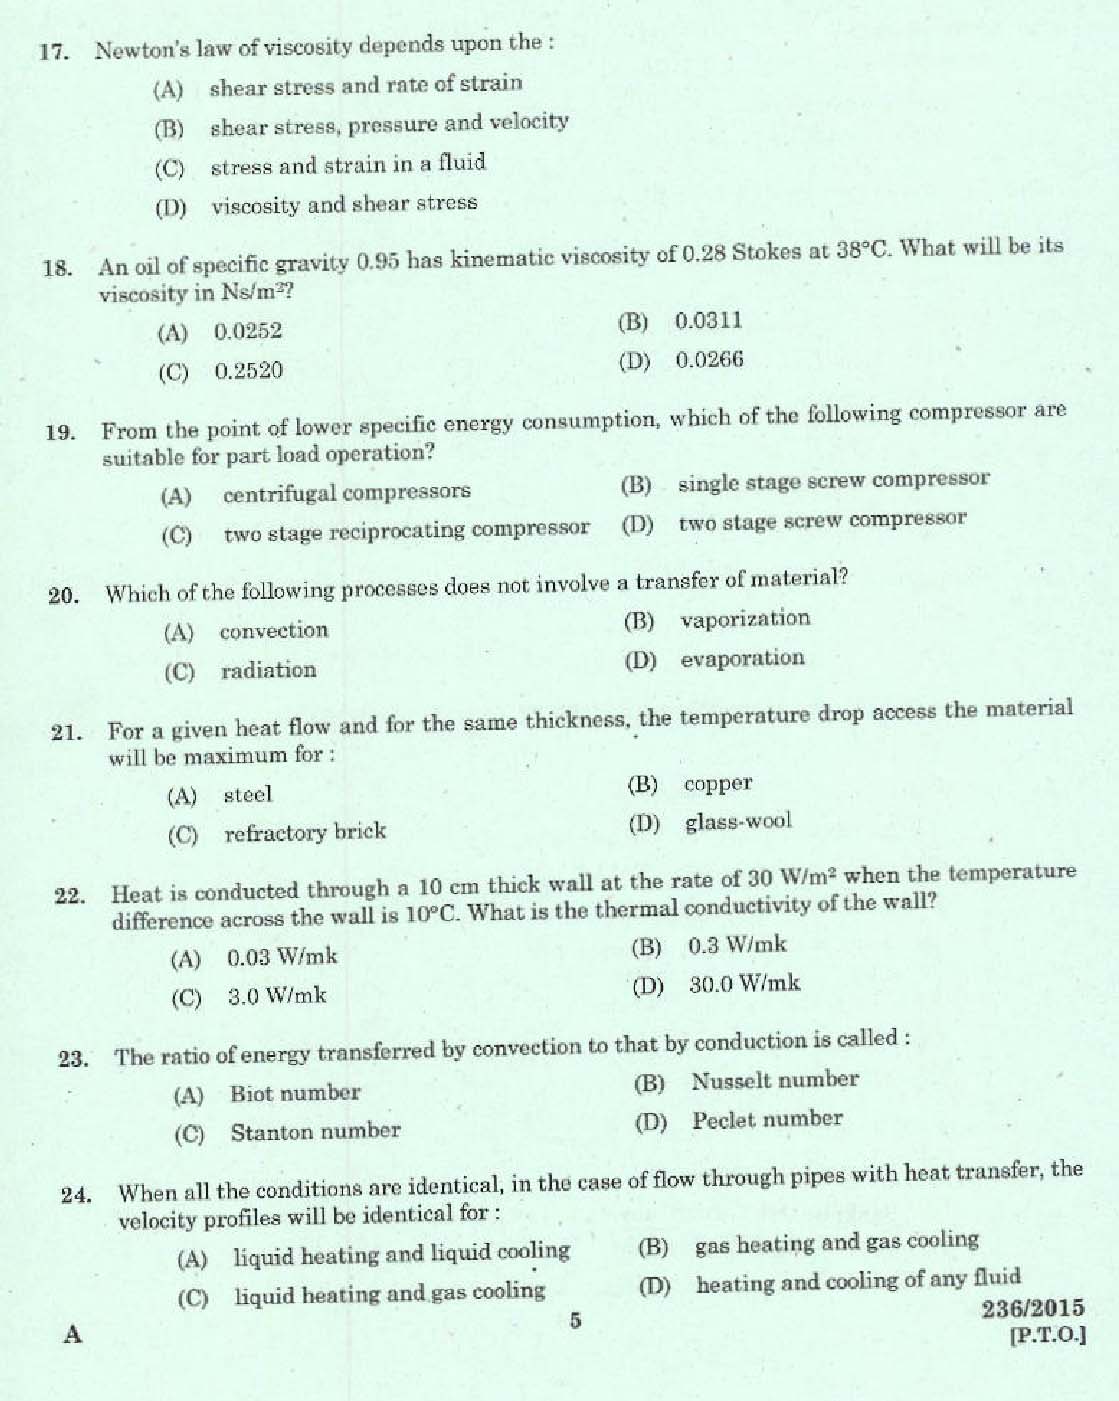 Kerala PSC Foreman Exam 2015 Question Paper Code 2362015 3